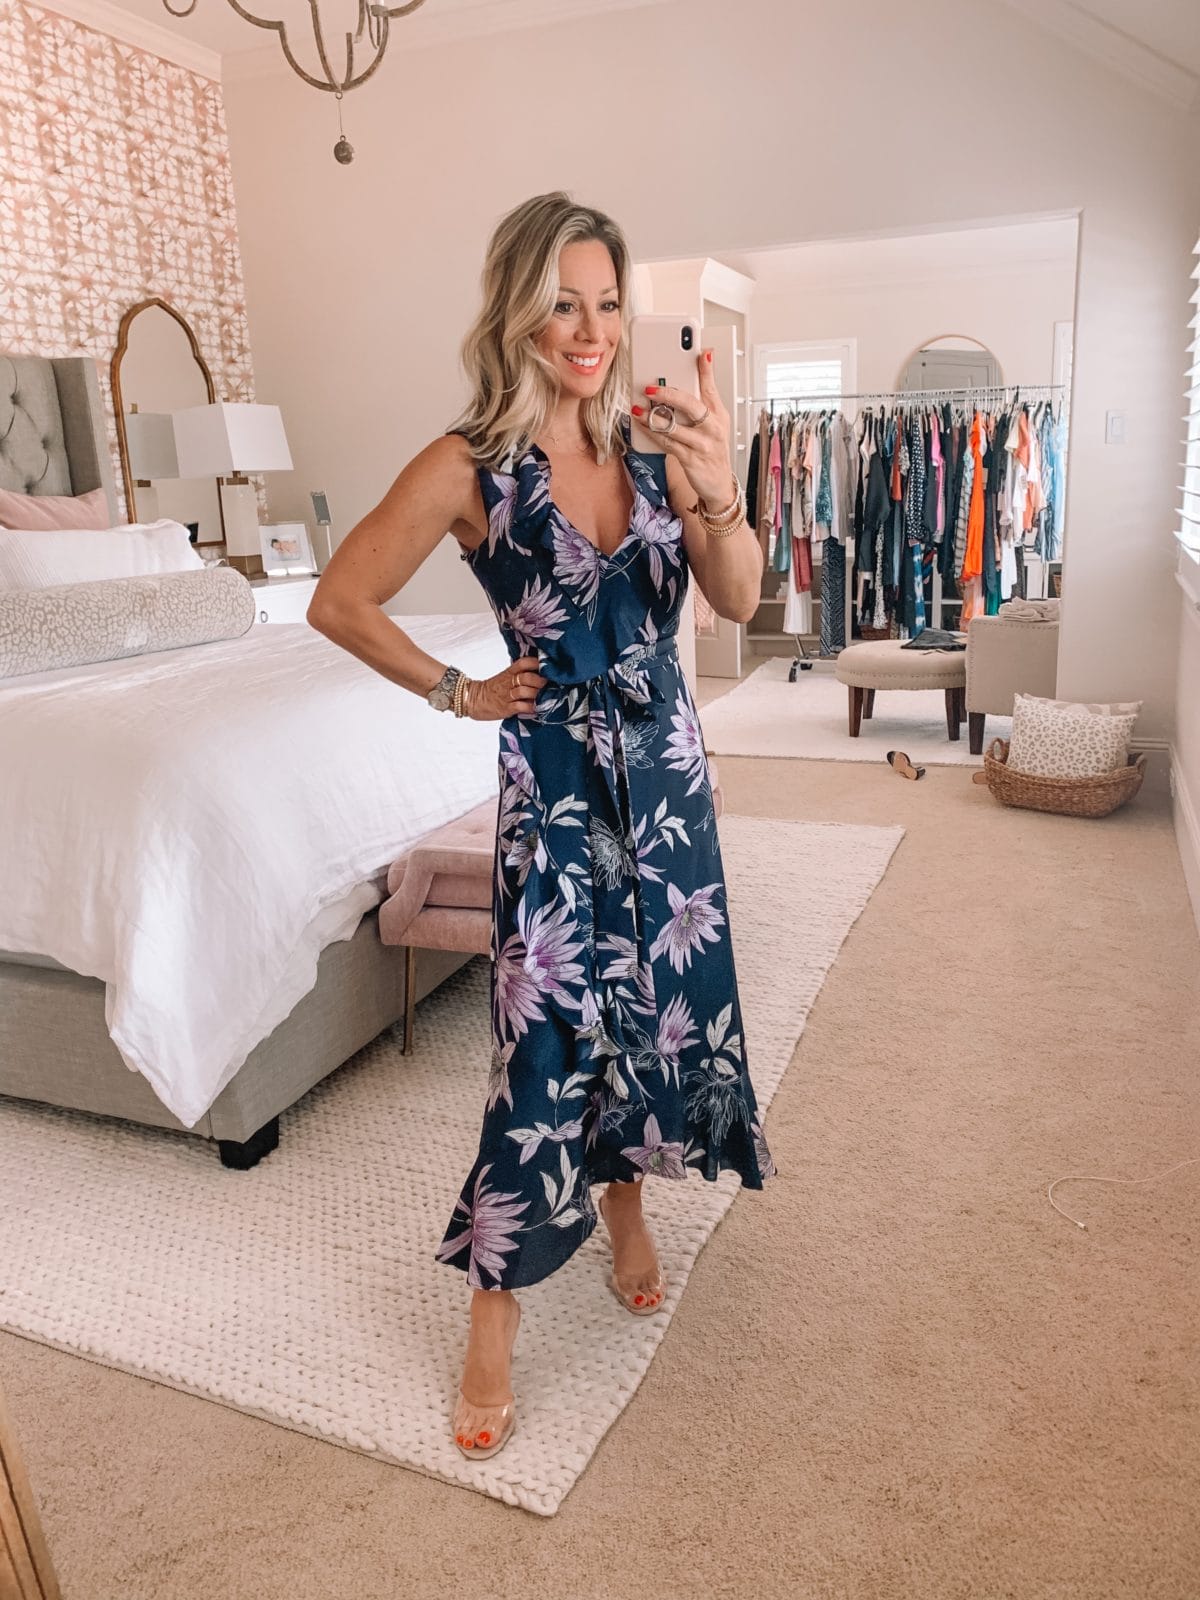 Dressing Room Finds Nordstrom and Target, Blue Floral Maxi Dress, Clear Heels